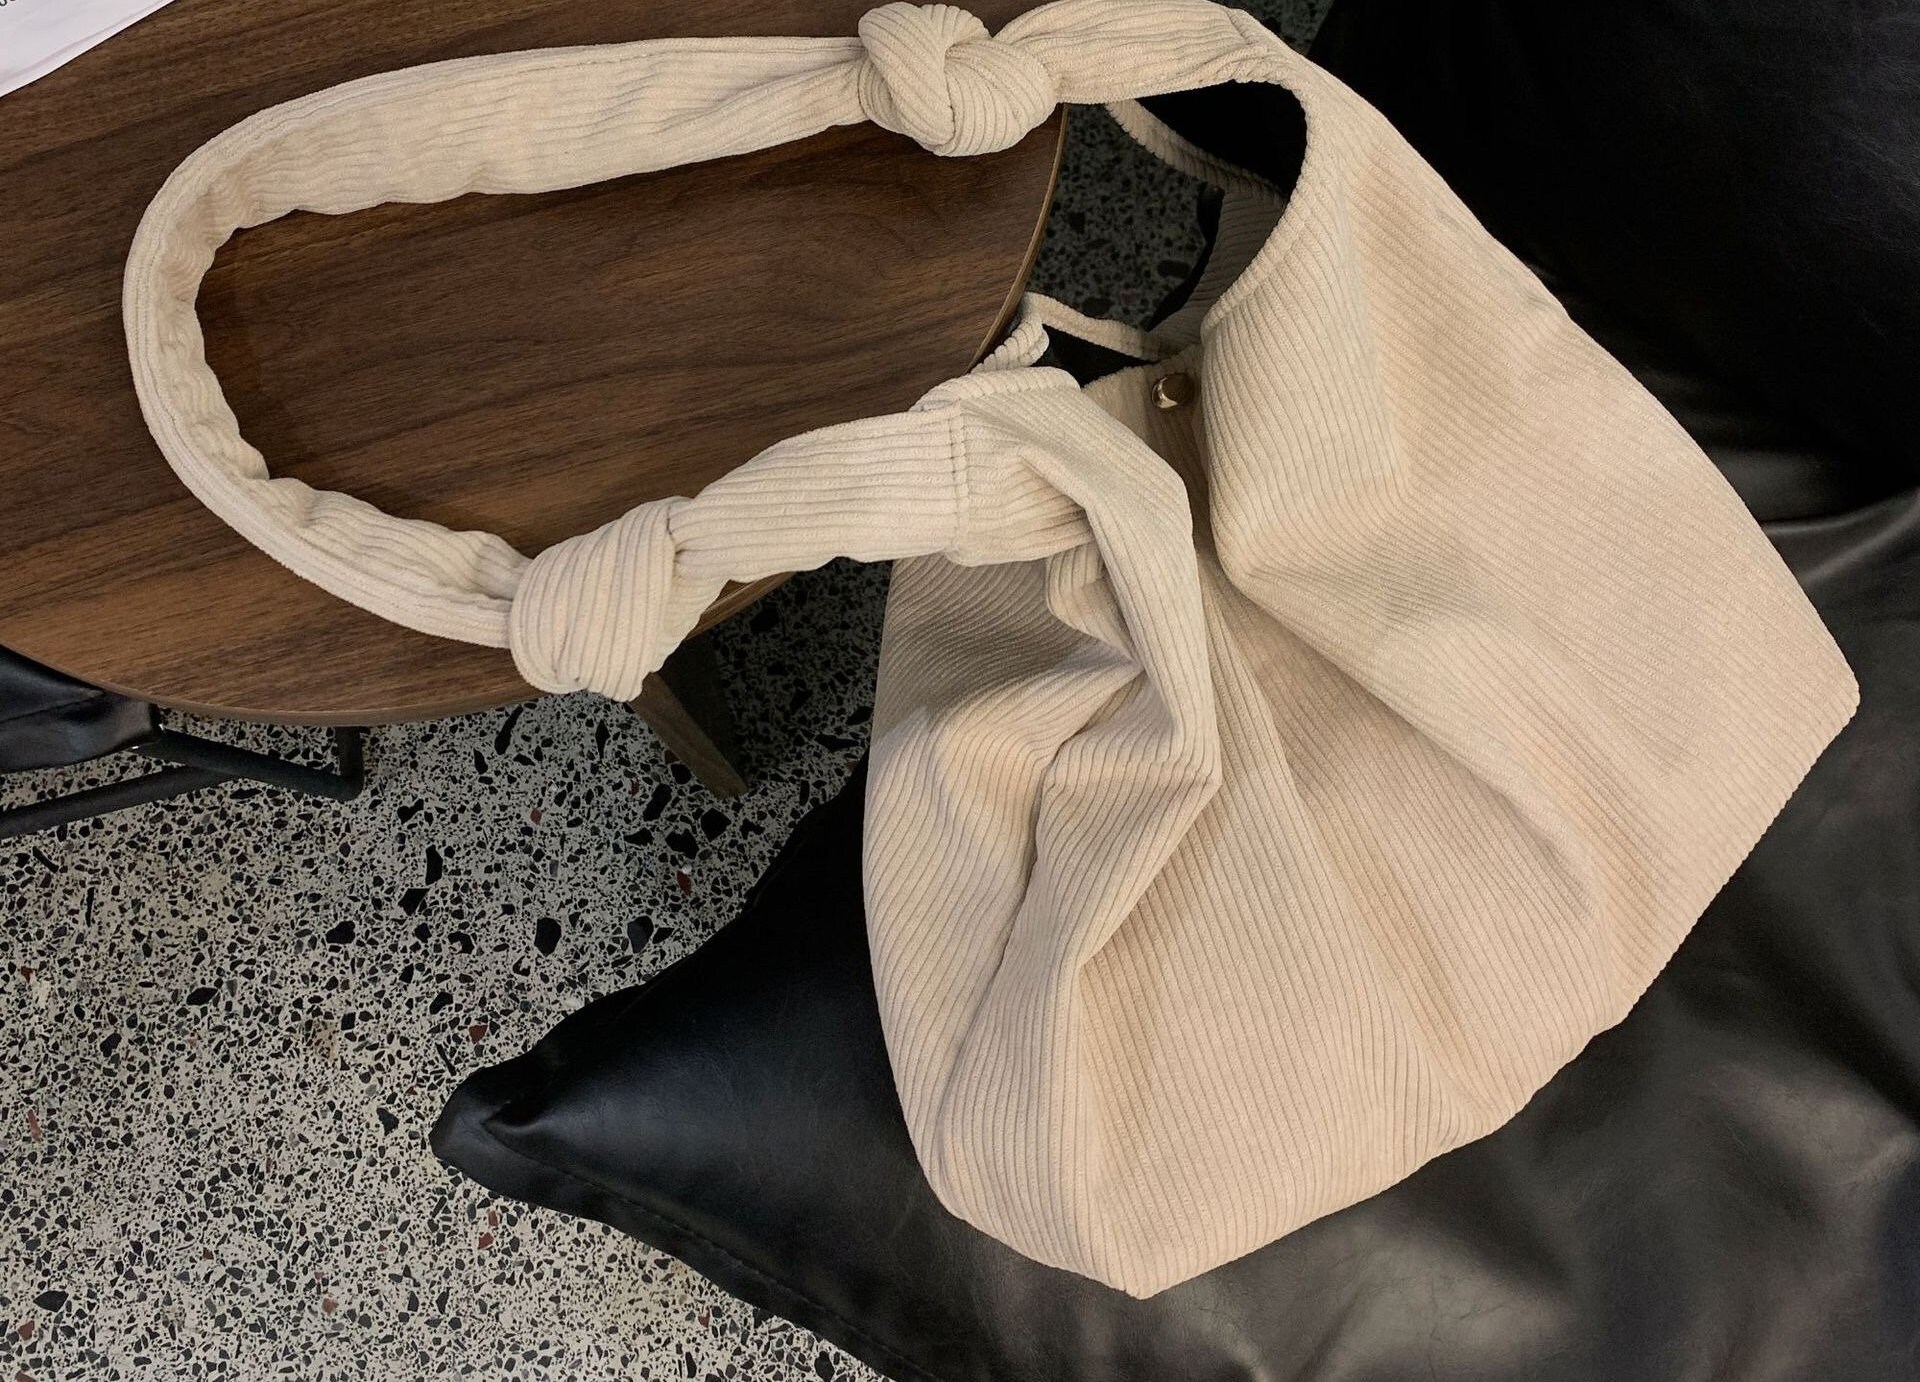 Corduroy Tote Shopping Handbag Women Shoulder Reusable Foldable Eco Friendly Gift Work Bag